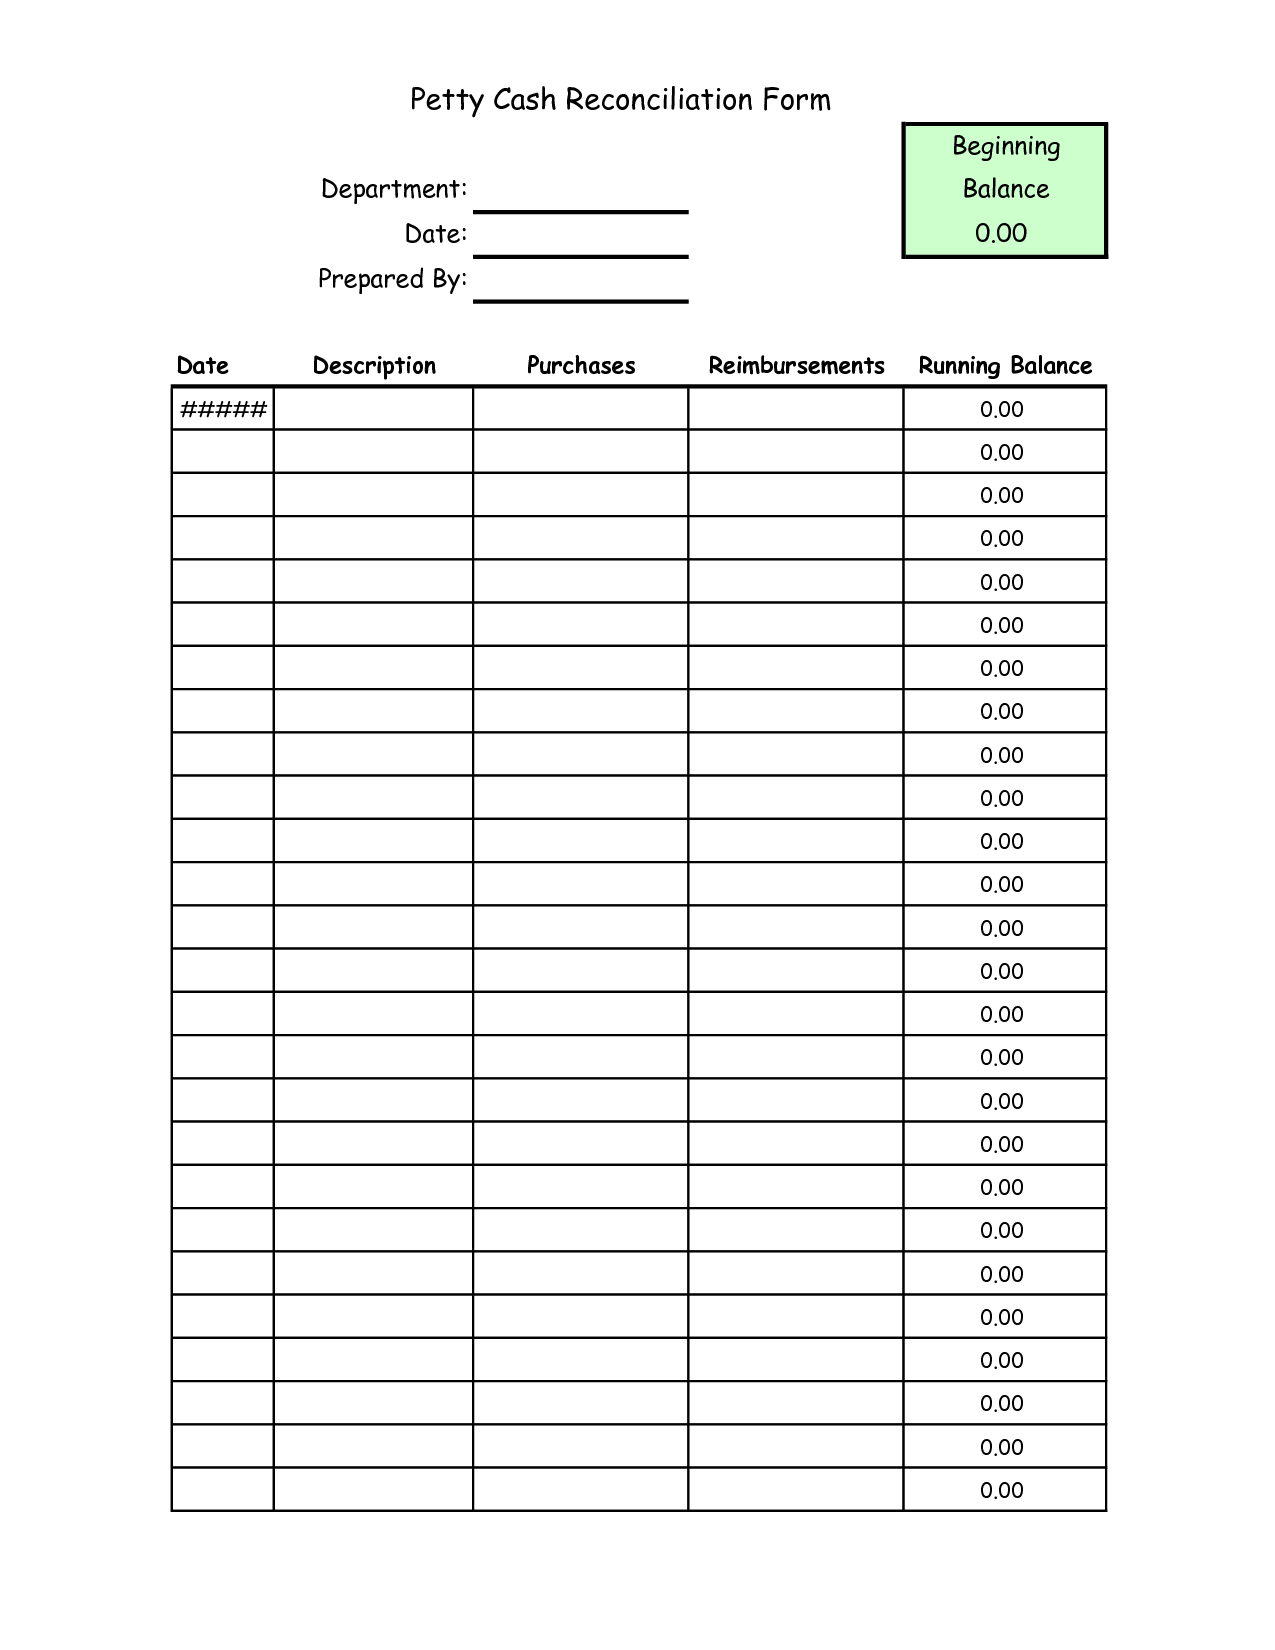 Petty Cash Reconciliation Form Template | Template | Pinterest - Free Printable Petty Cash Template